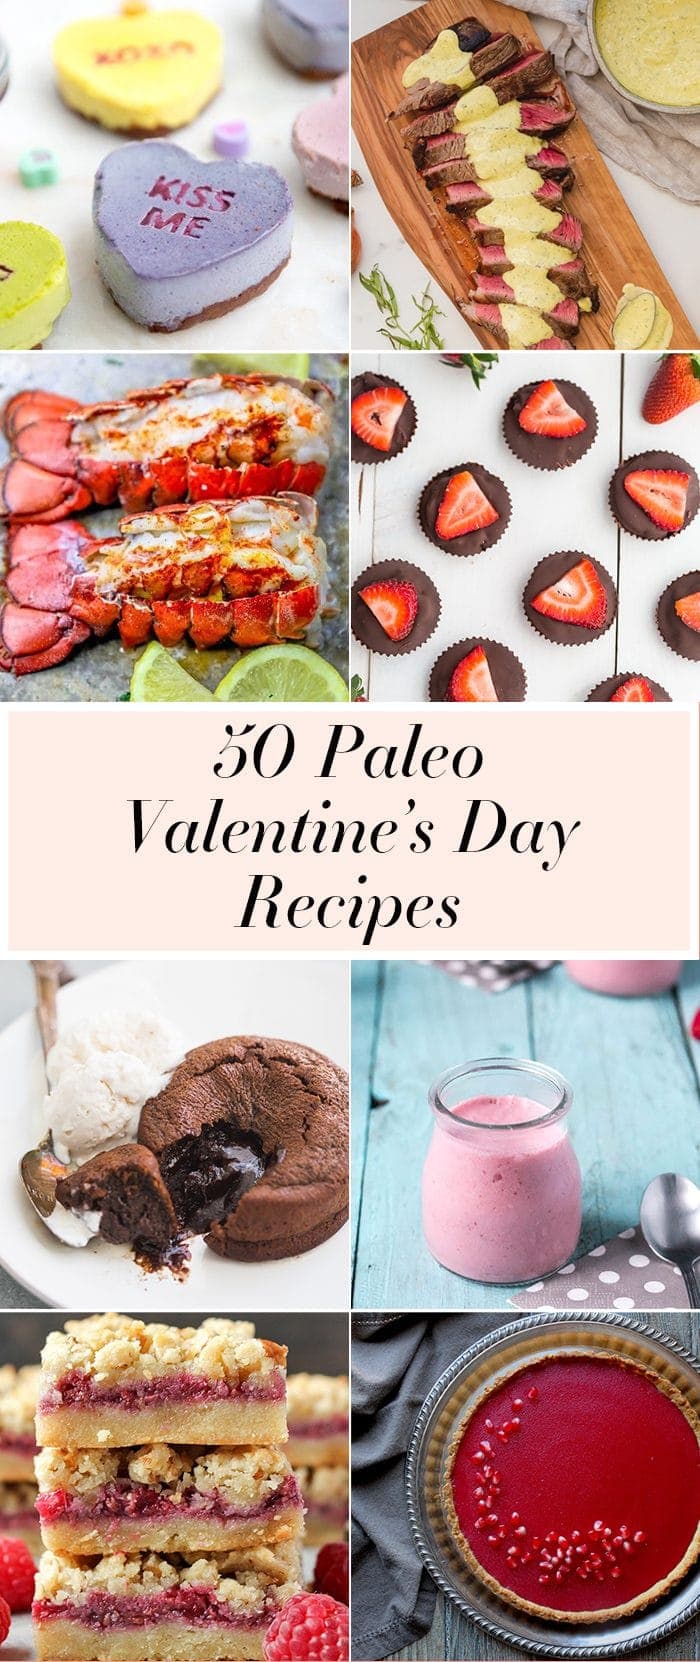 Compilation of paleo Valentine's Day recipes